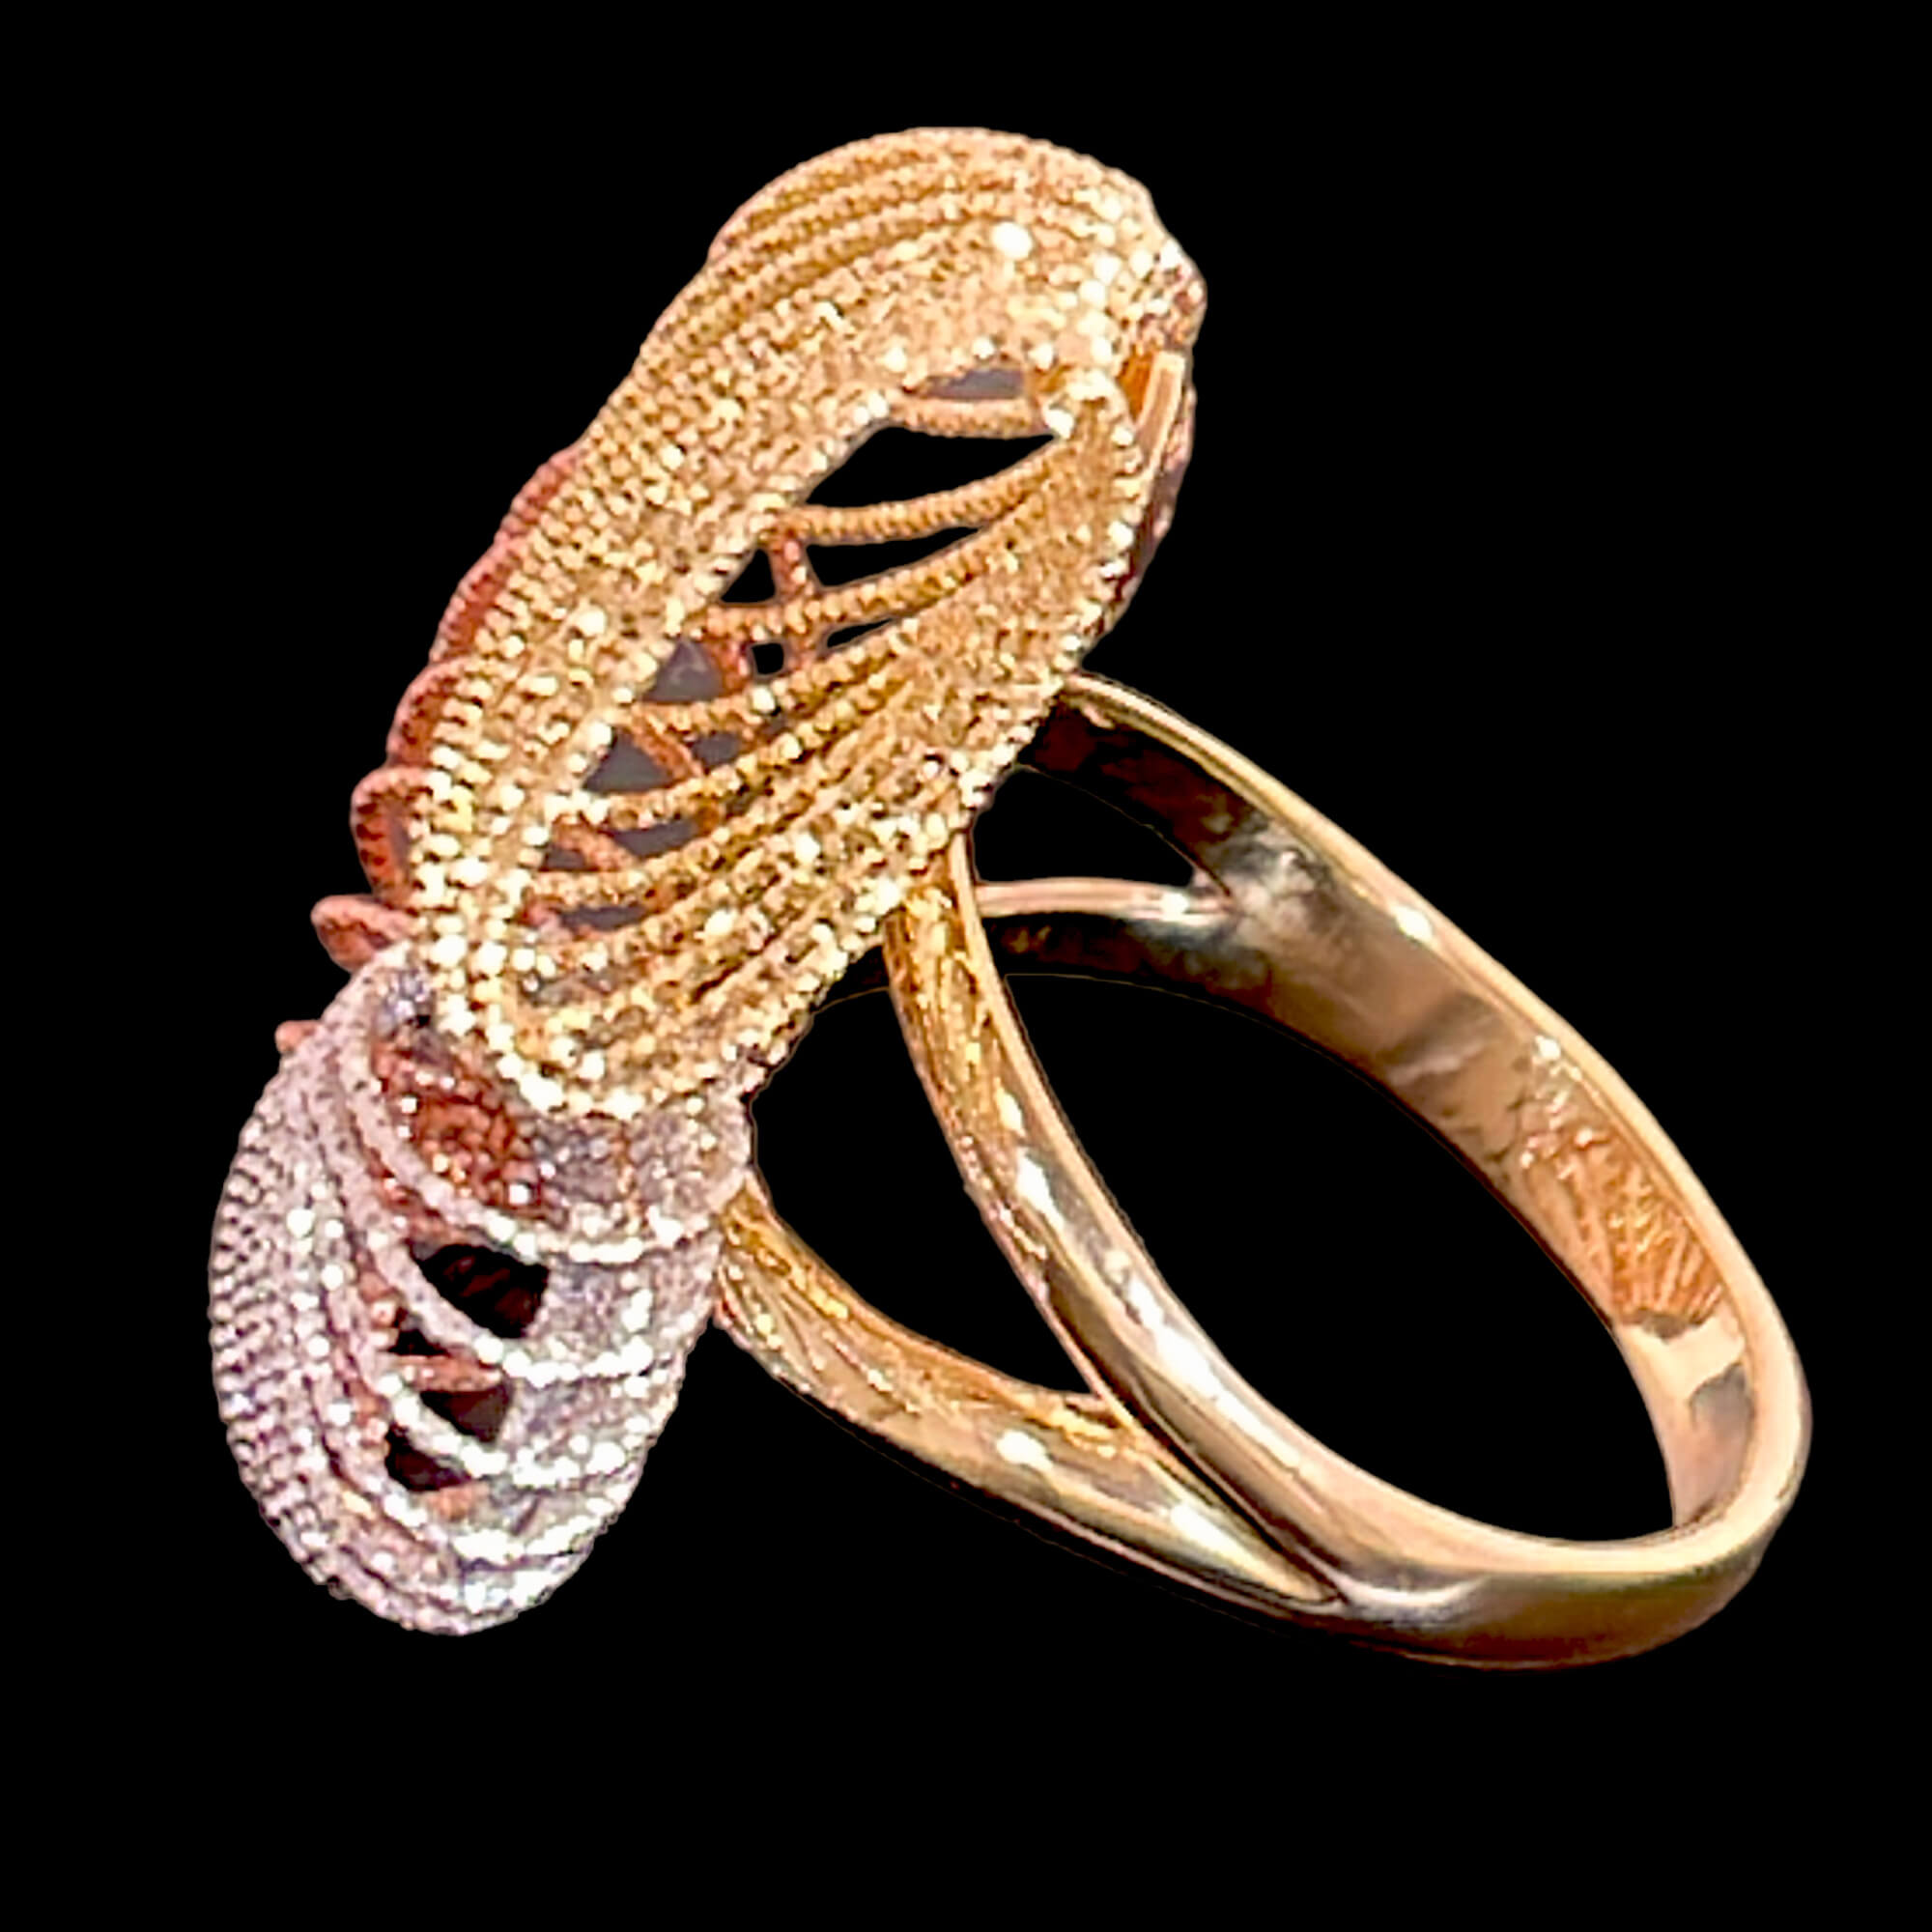 Bewerkte driekleurige ring van 18kt goud